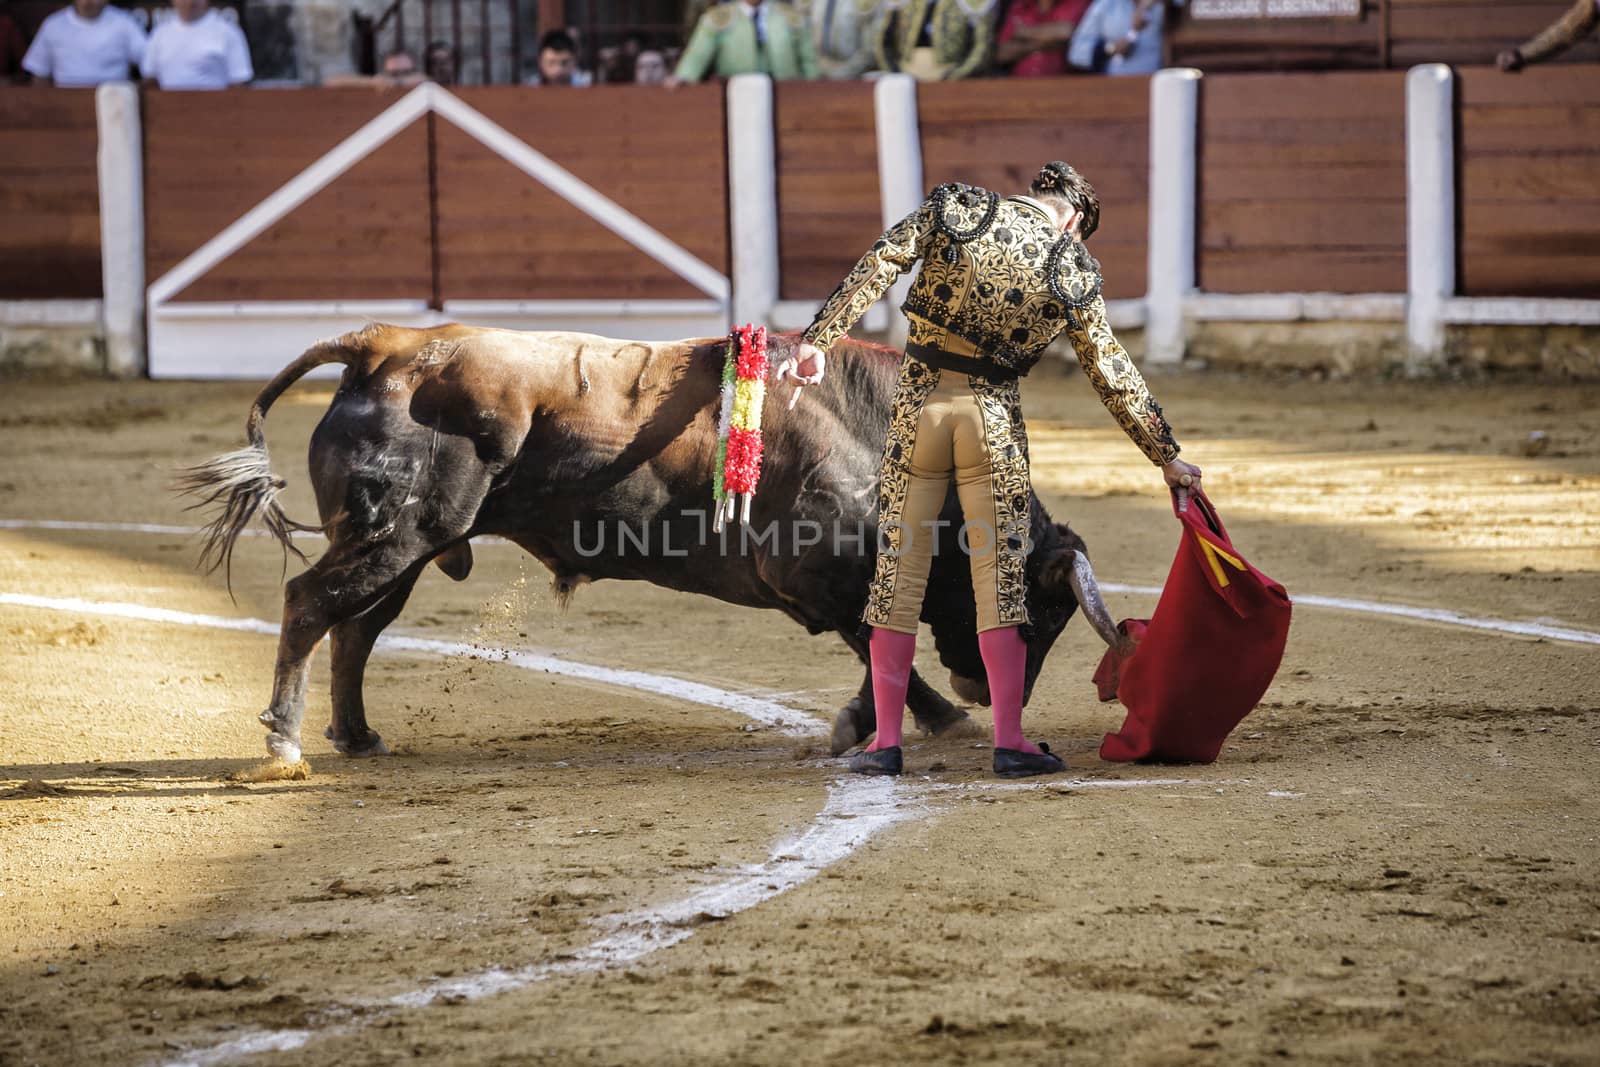 Ubeda, Jaen provincia, SPAIN , 29 september 2010:  Spanish bullfighter Morante de la Puebla bullfighting with the crutch in his first Bull of the afternoon in bullring of Ubeda, Jaen, Spain, 29 September 2010